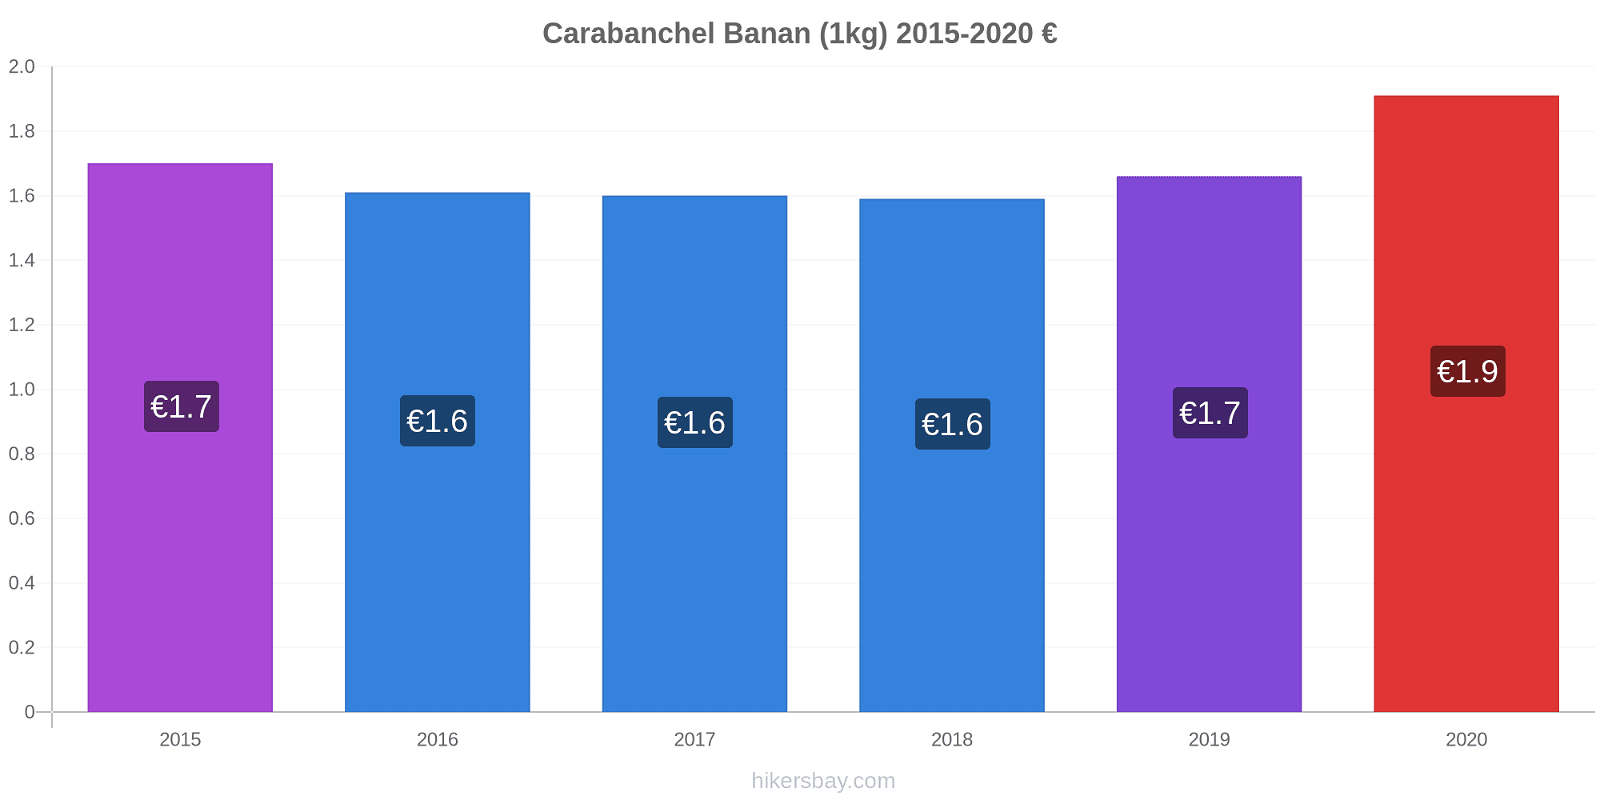 Carabanchel prisendringer Banan (1kg) hikersbay.com